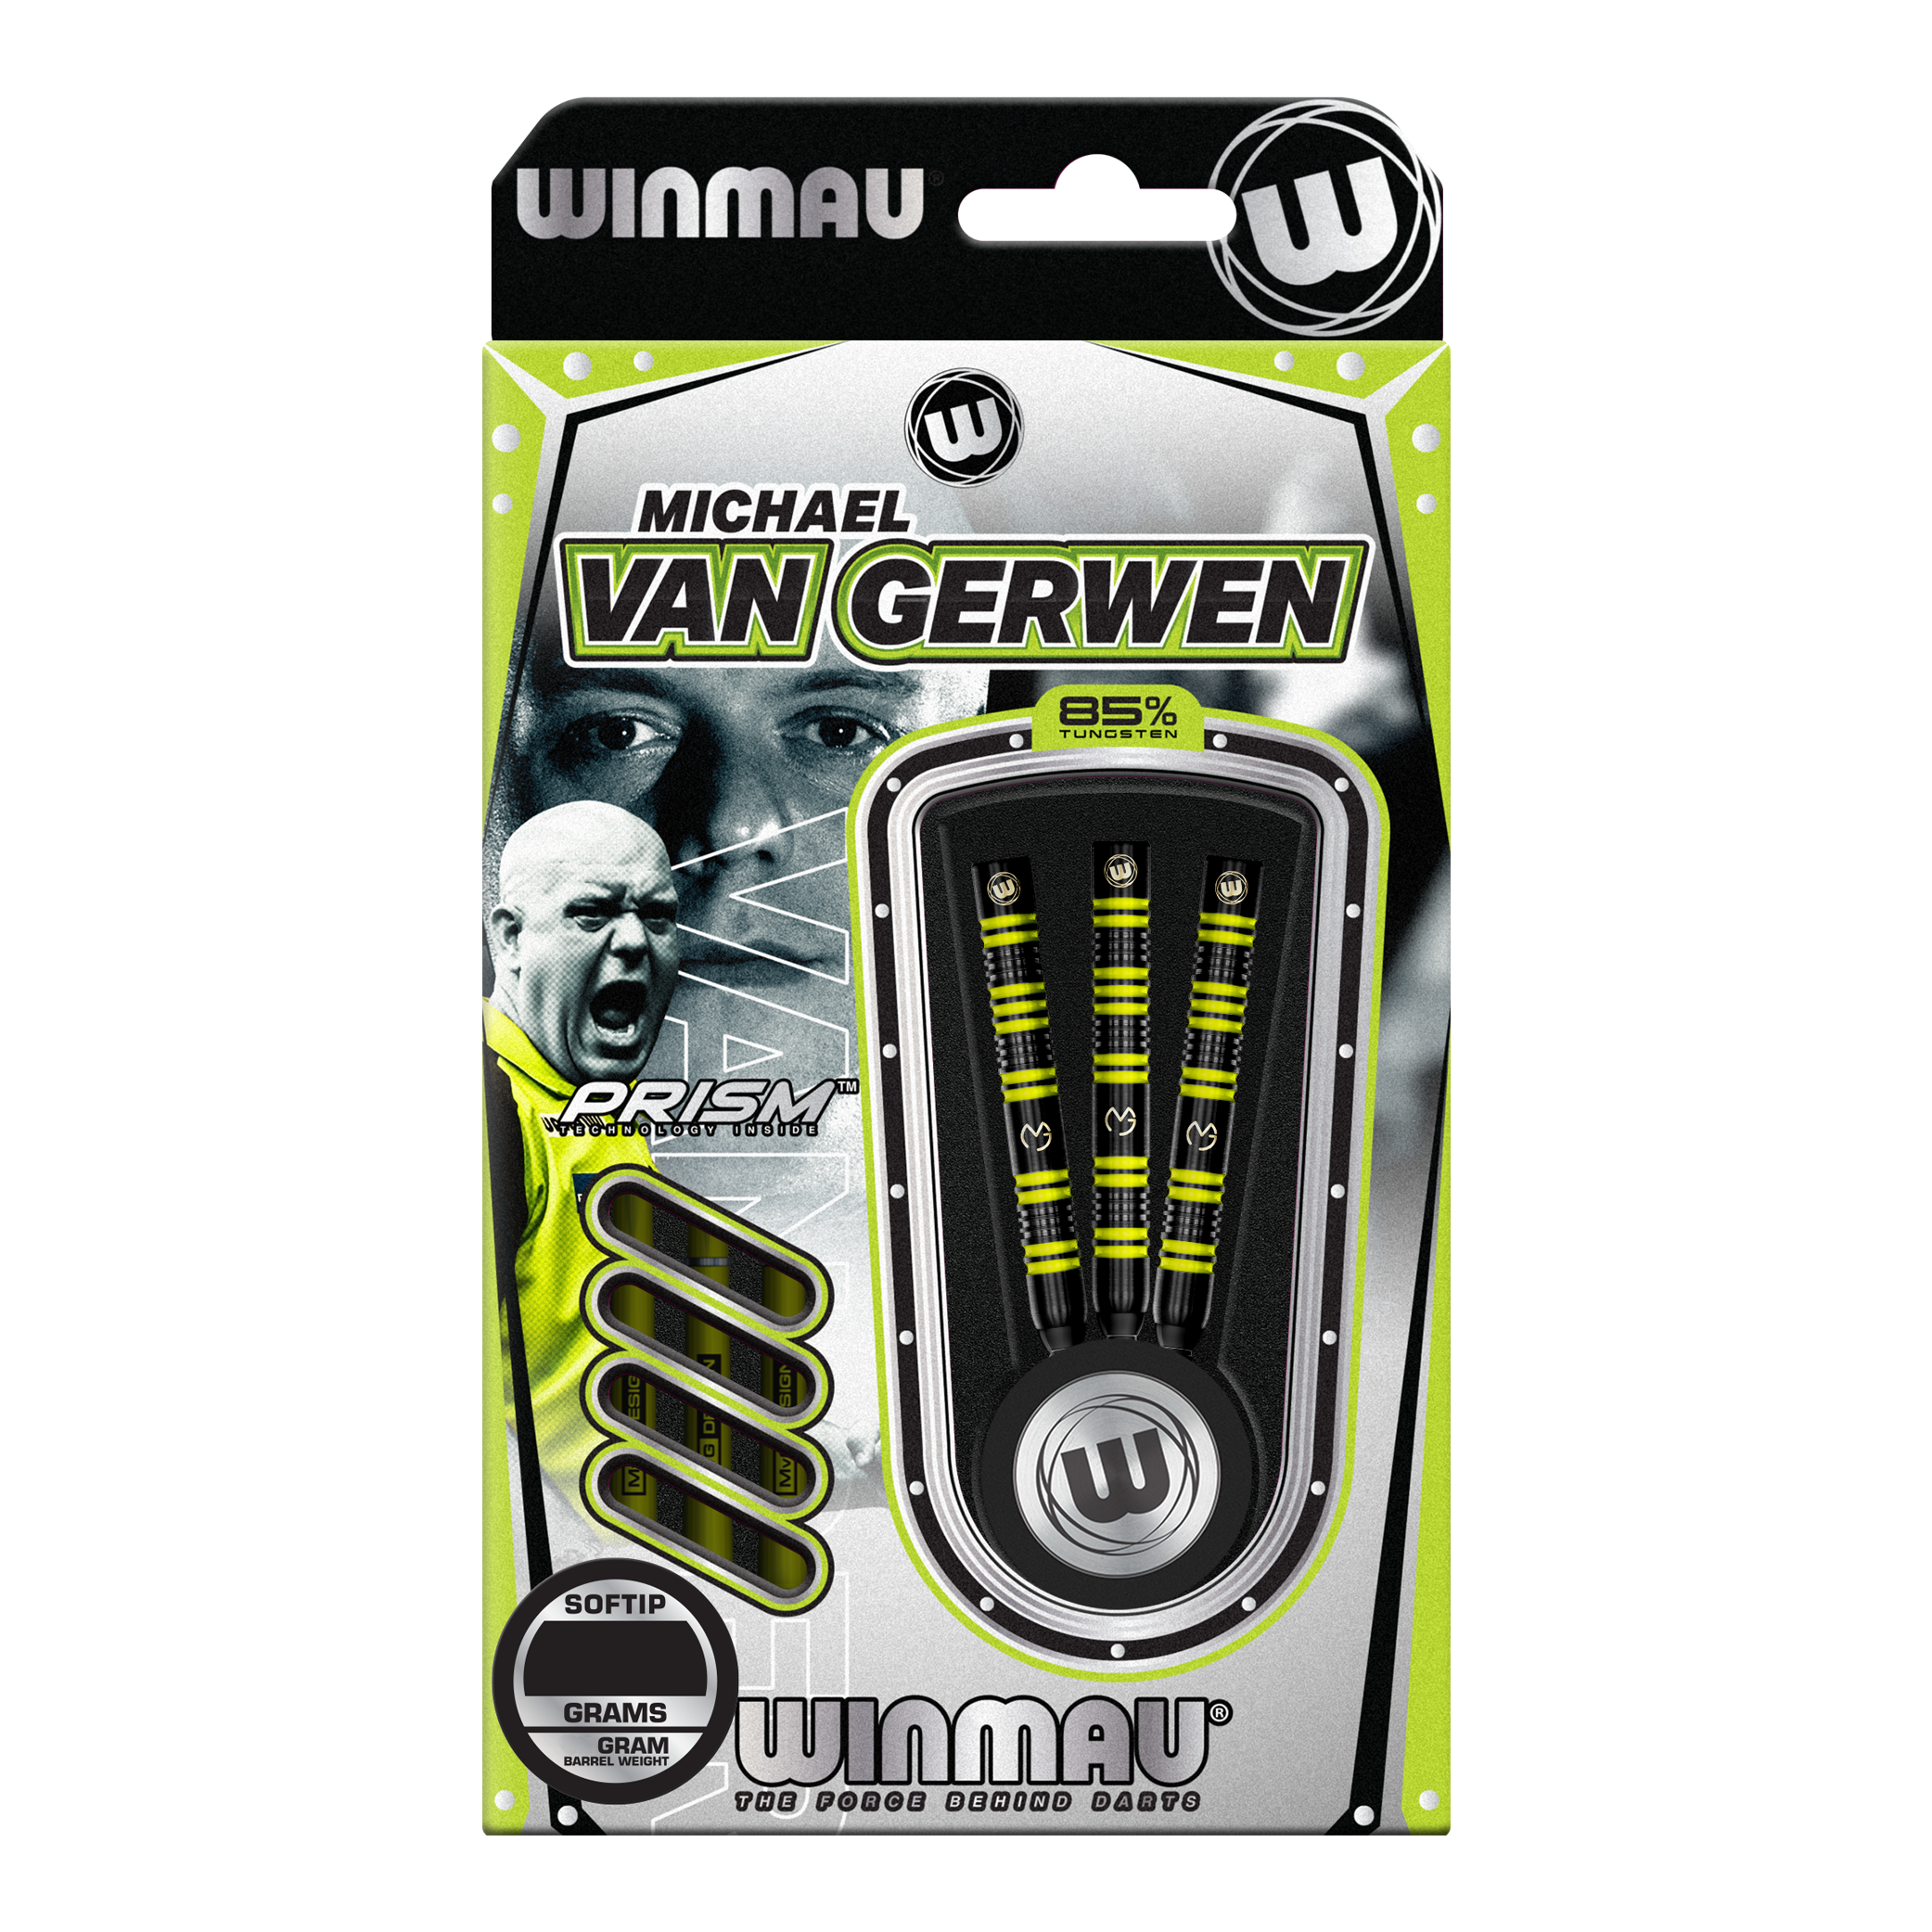 Winmau Michael Van Gerwen 85 Pro-Series Zachte Darts - 20g